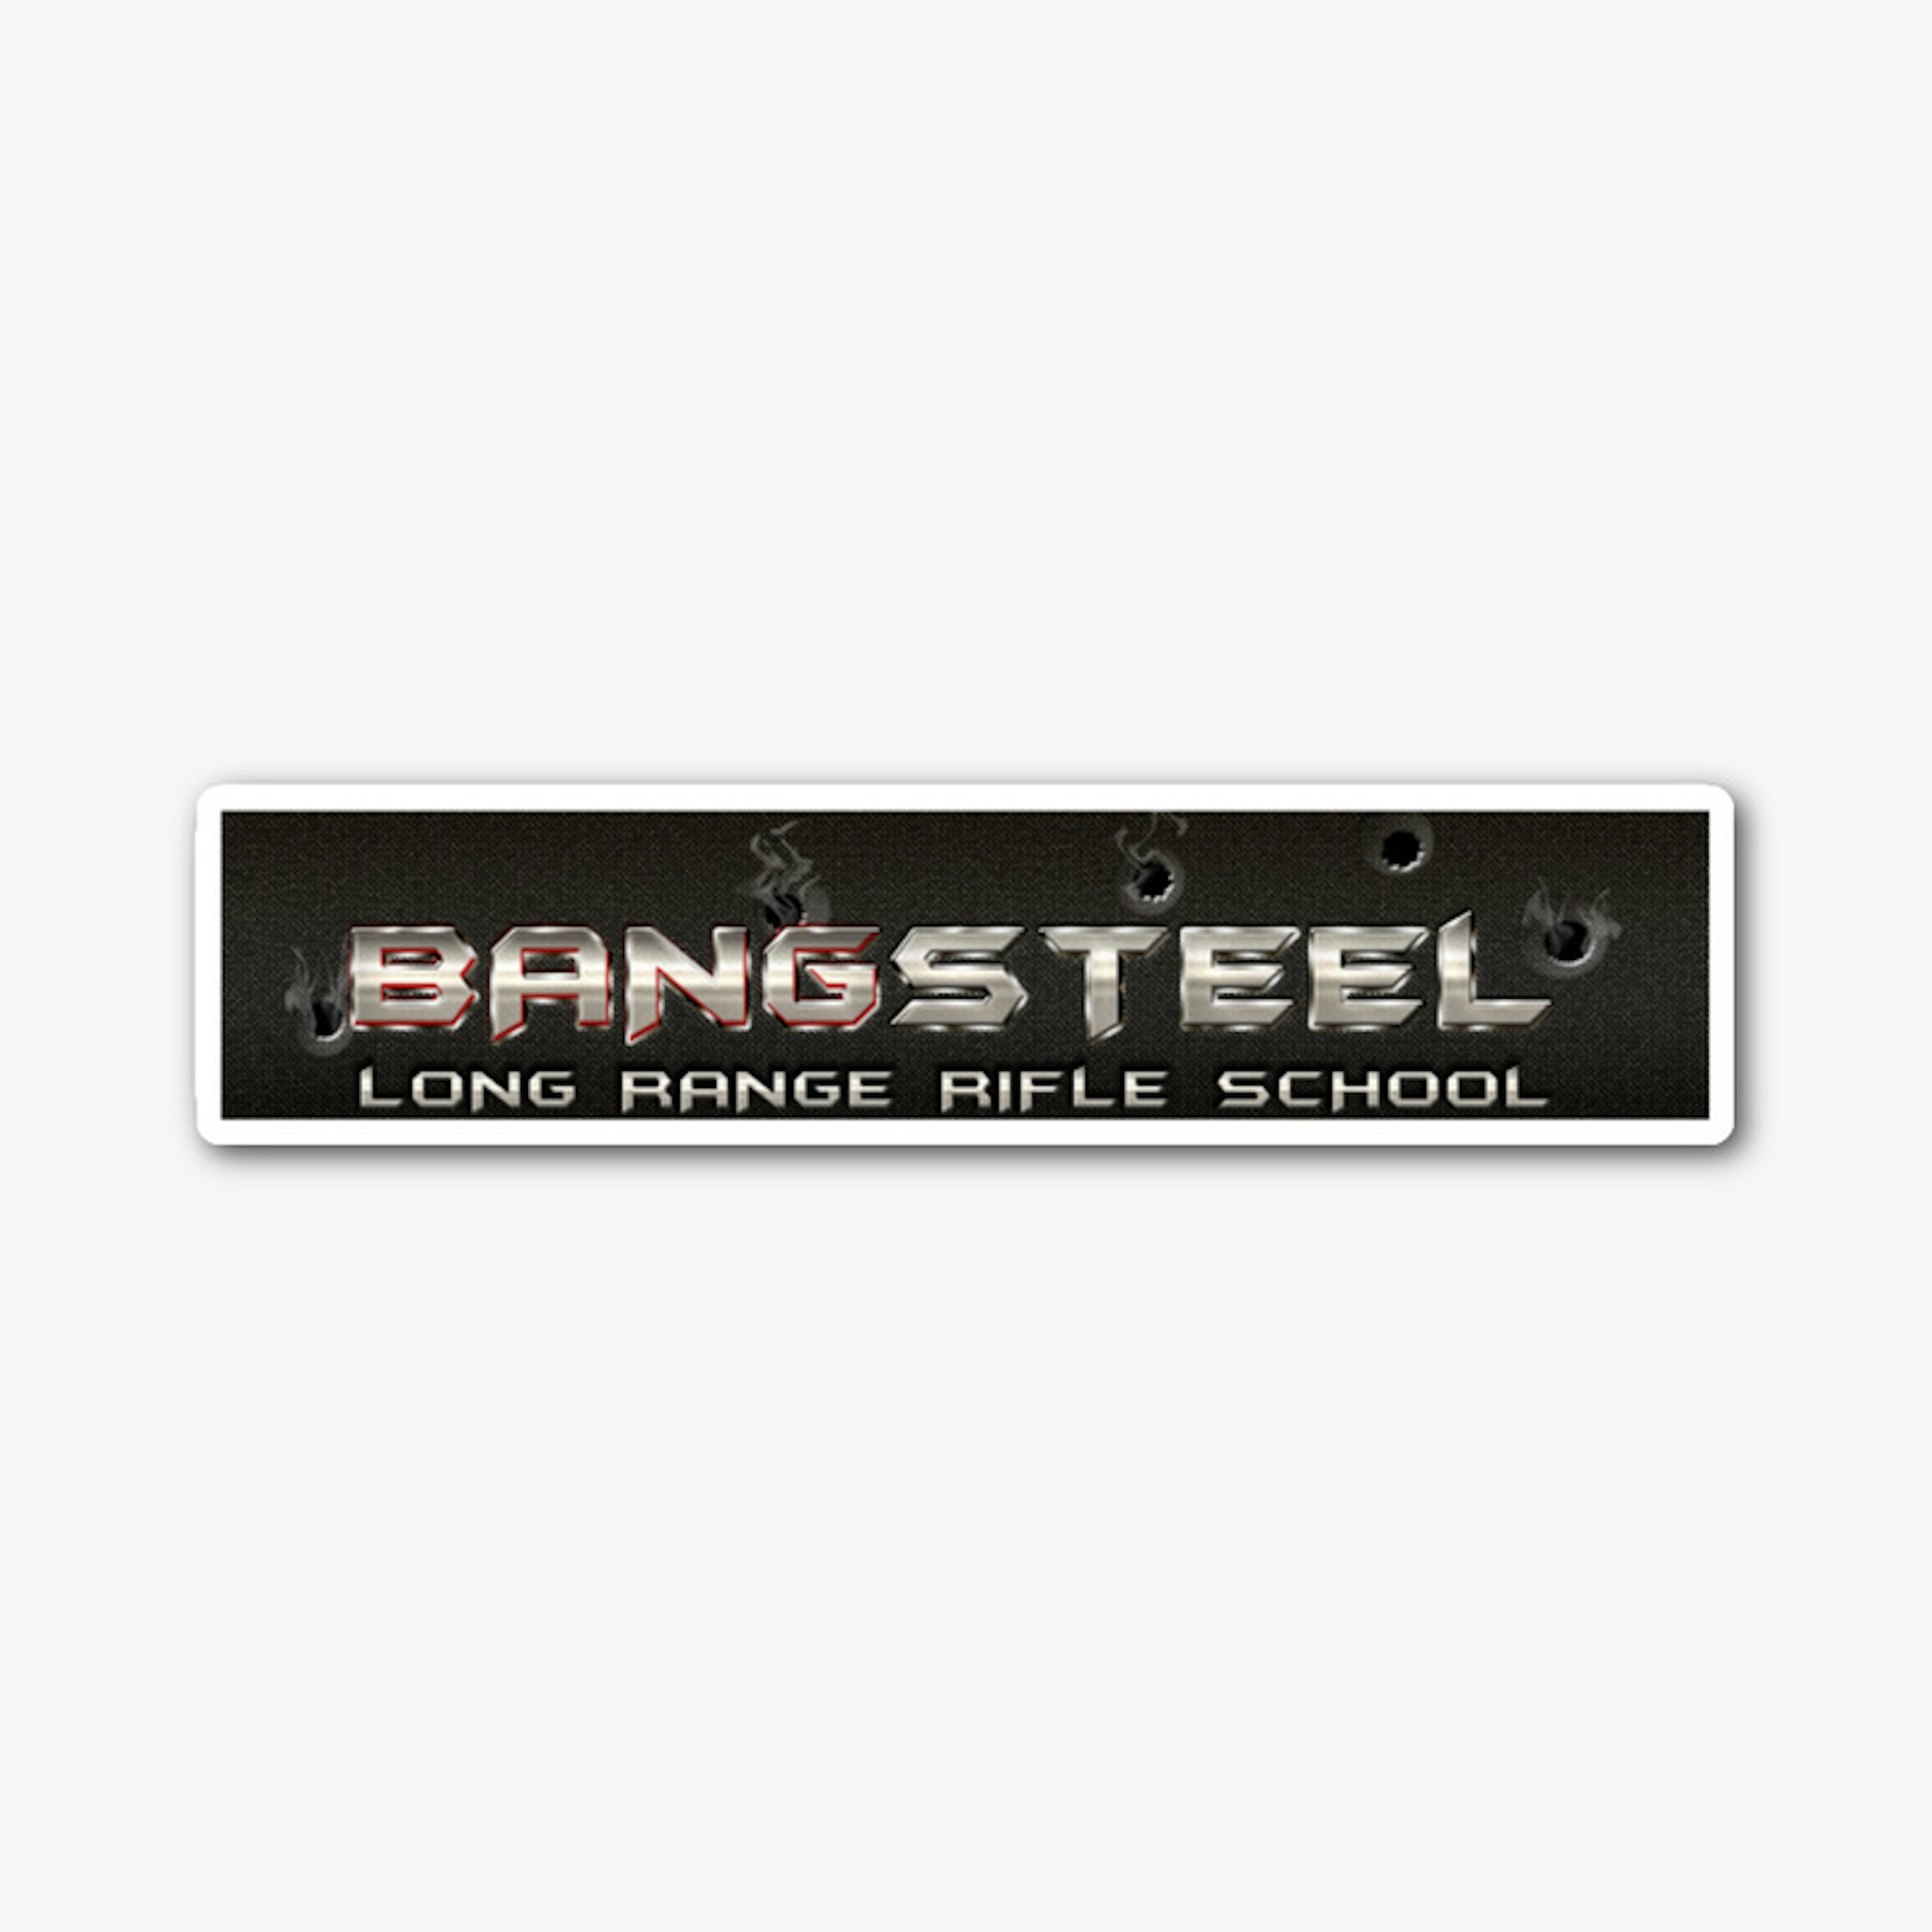 Basic BangSteel t-shirt